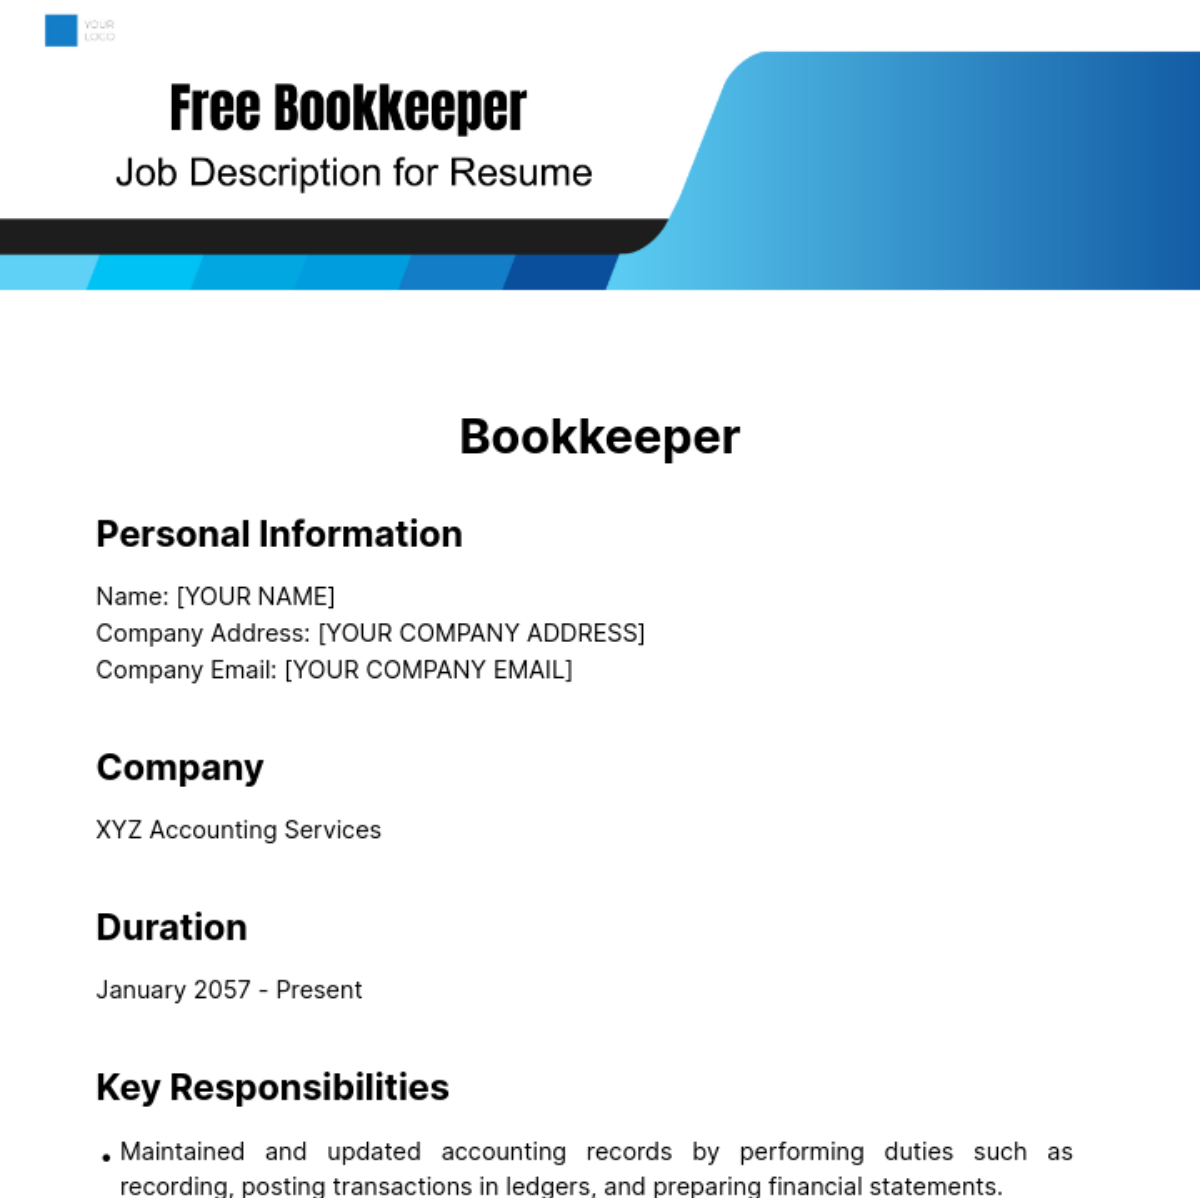 Bookkeeper Job Description for Resume Template